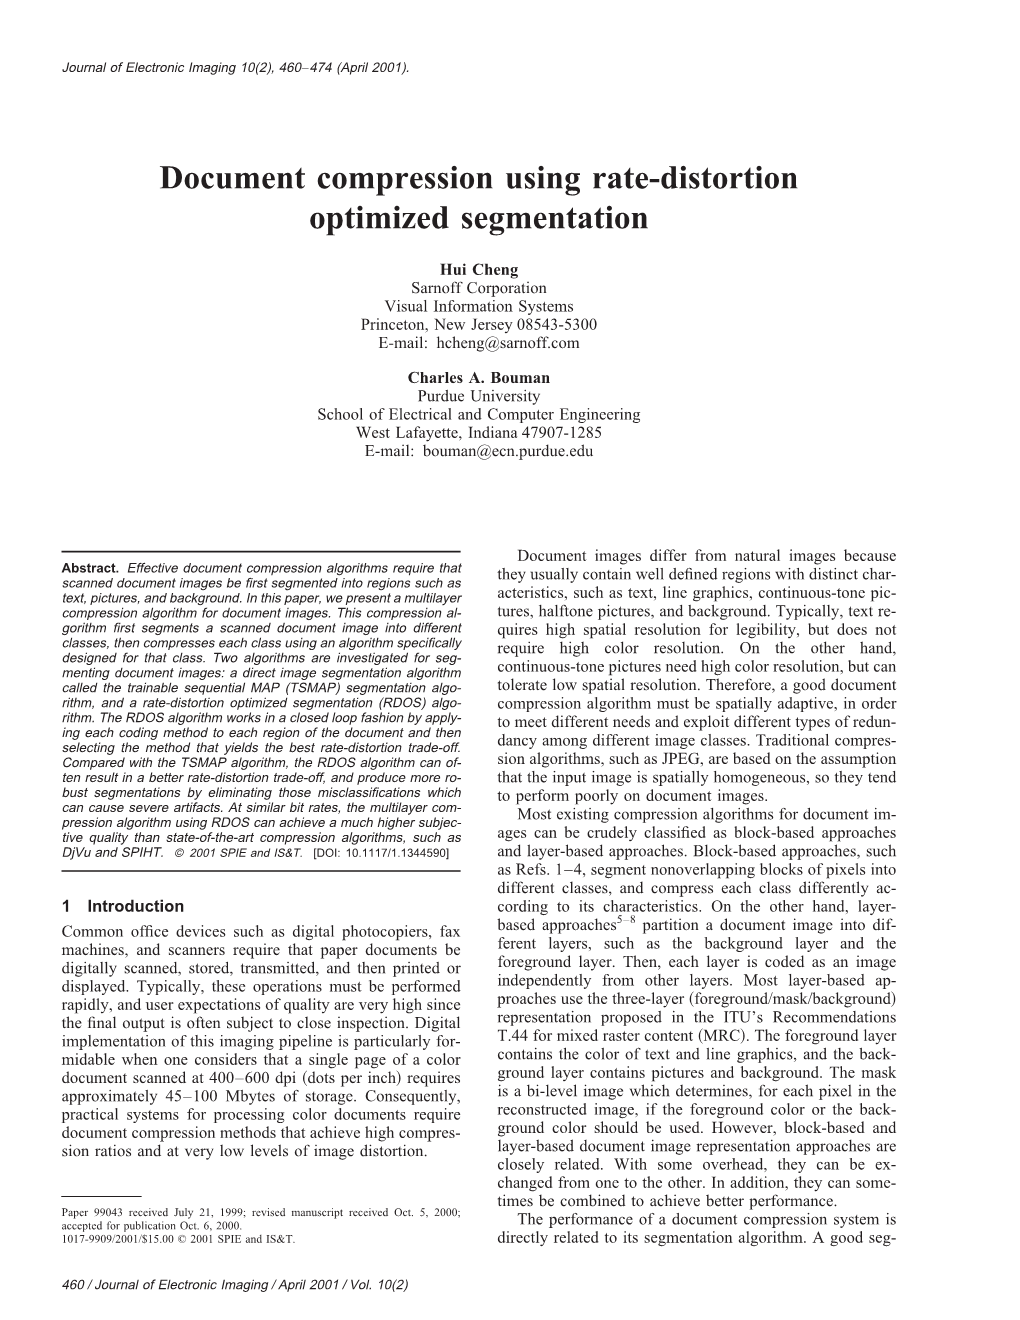 Document Compression Using Rate-Distortion Optimized Segmentation